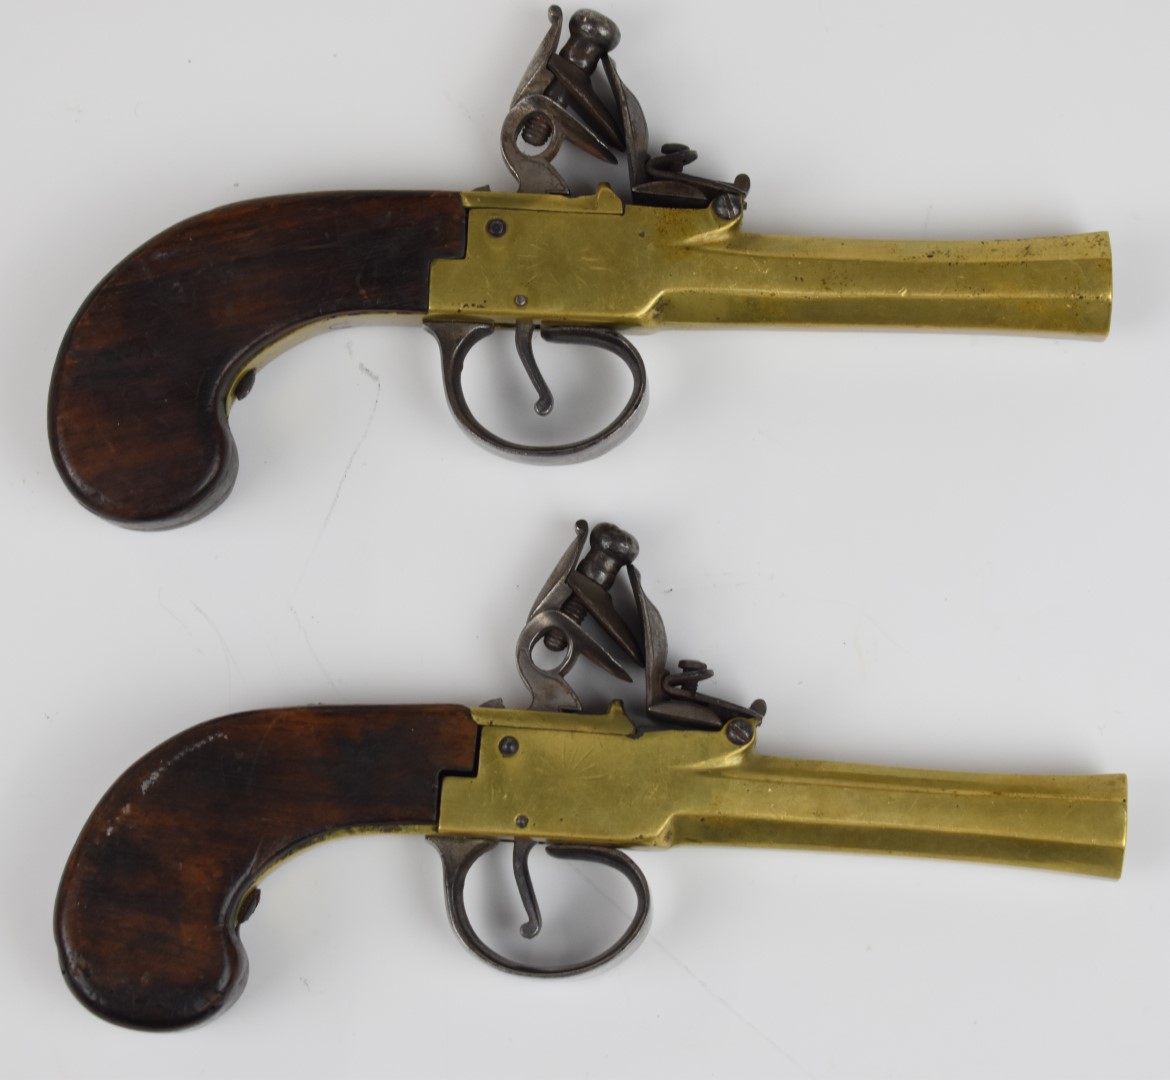 A pair of unnamed flintlock pocket pistols each with brass body, engraved locks, steel trigger